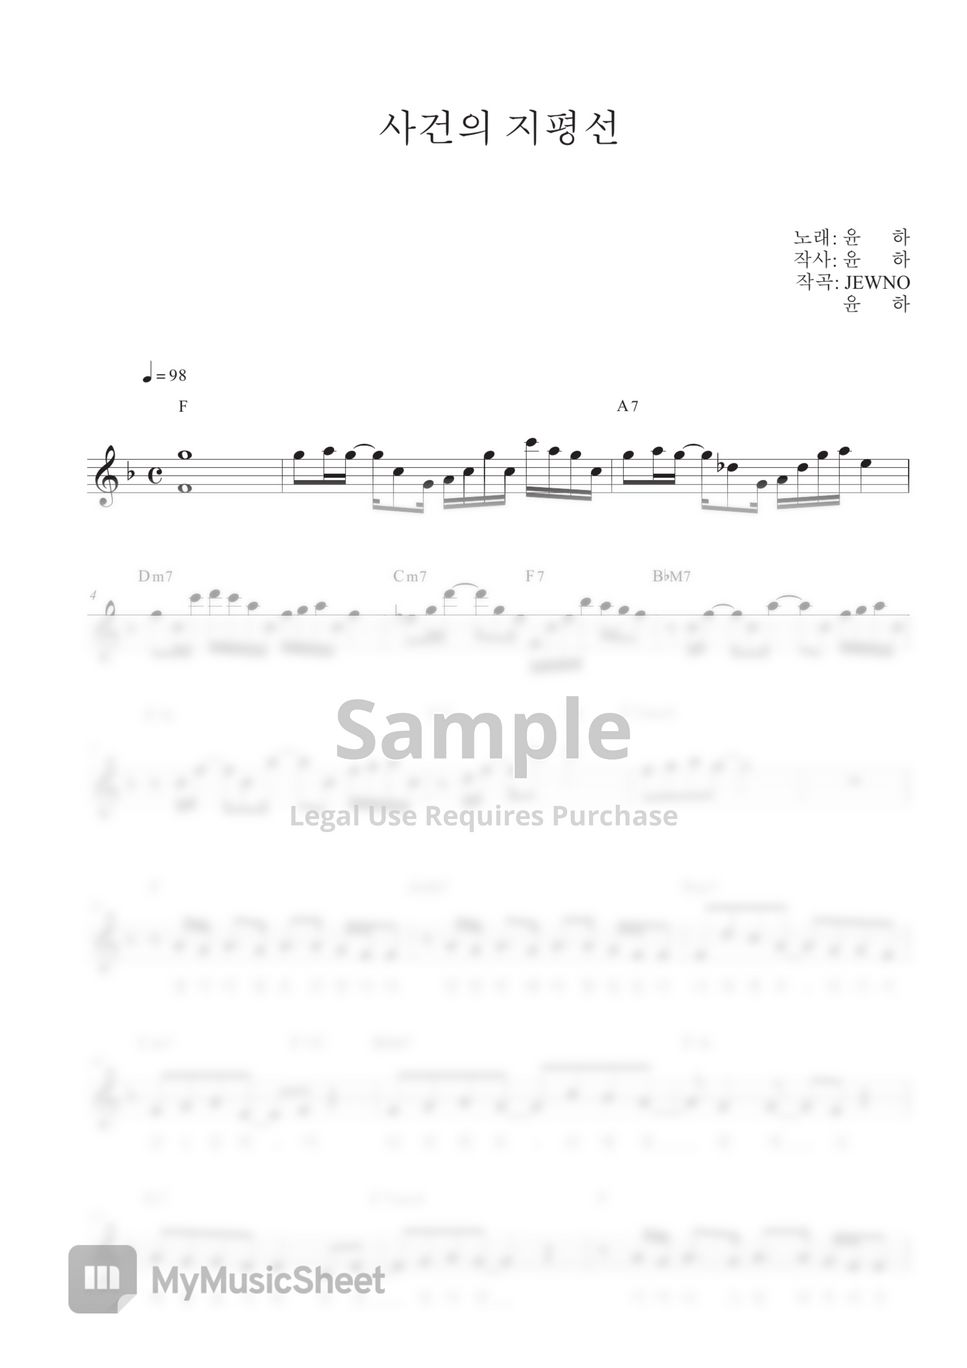 YOUNHA - Event Horizon F Major (Clarinet / Lyrics / Chords) by thesaxophonist